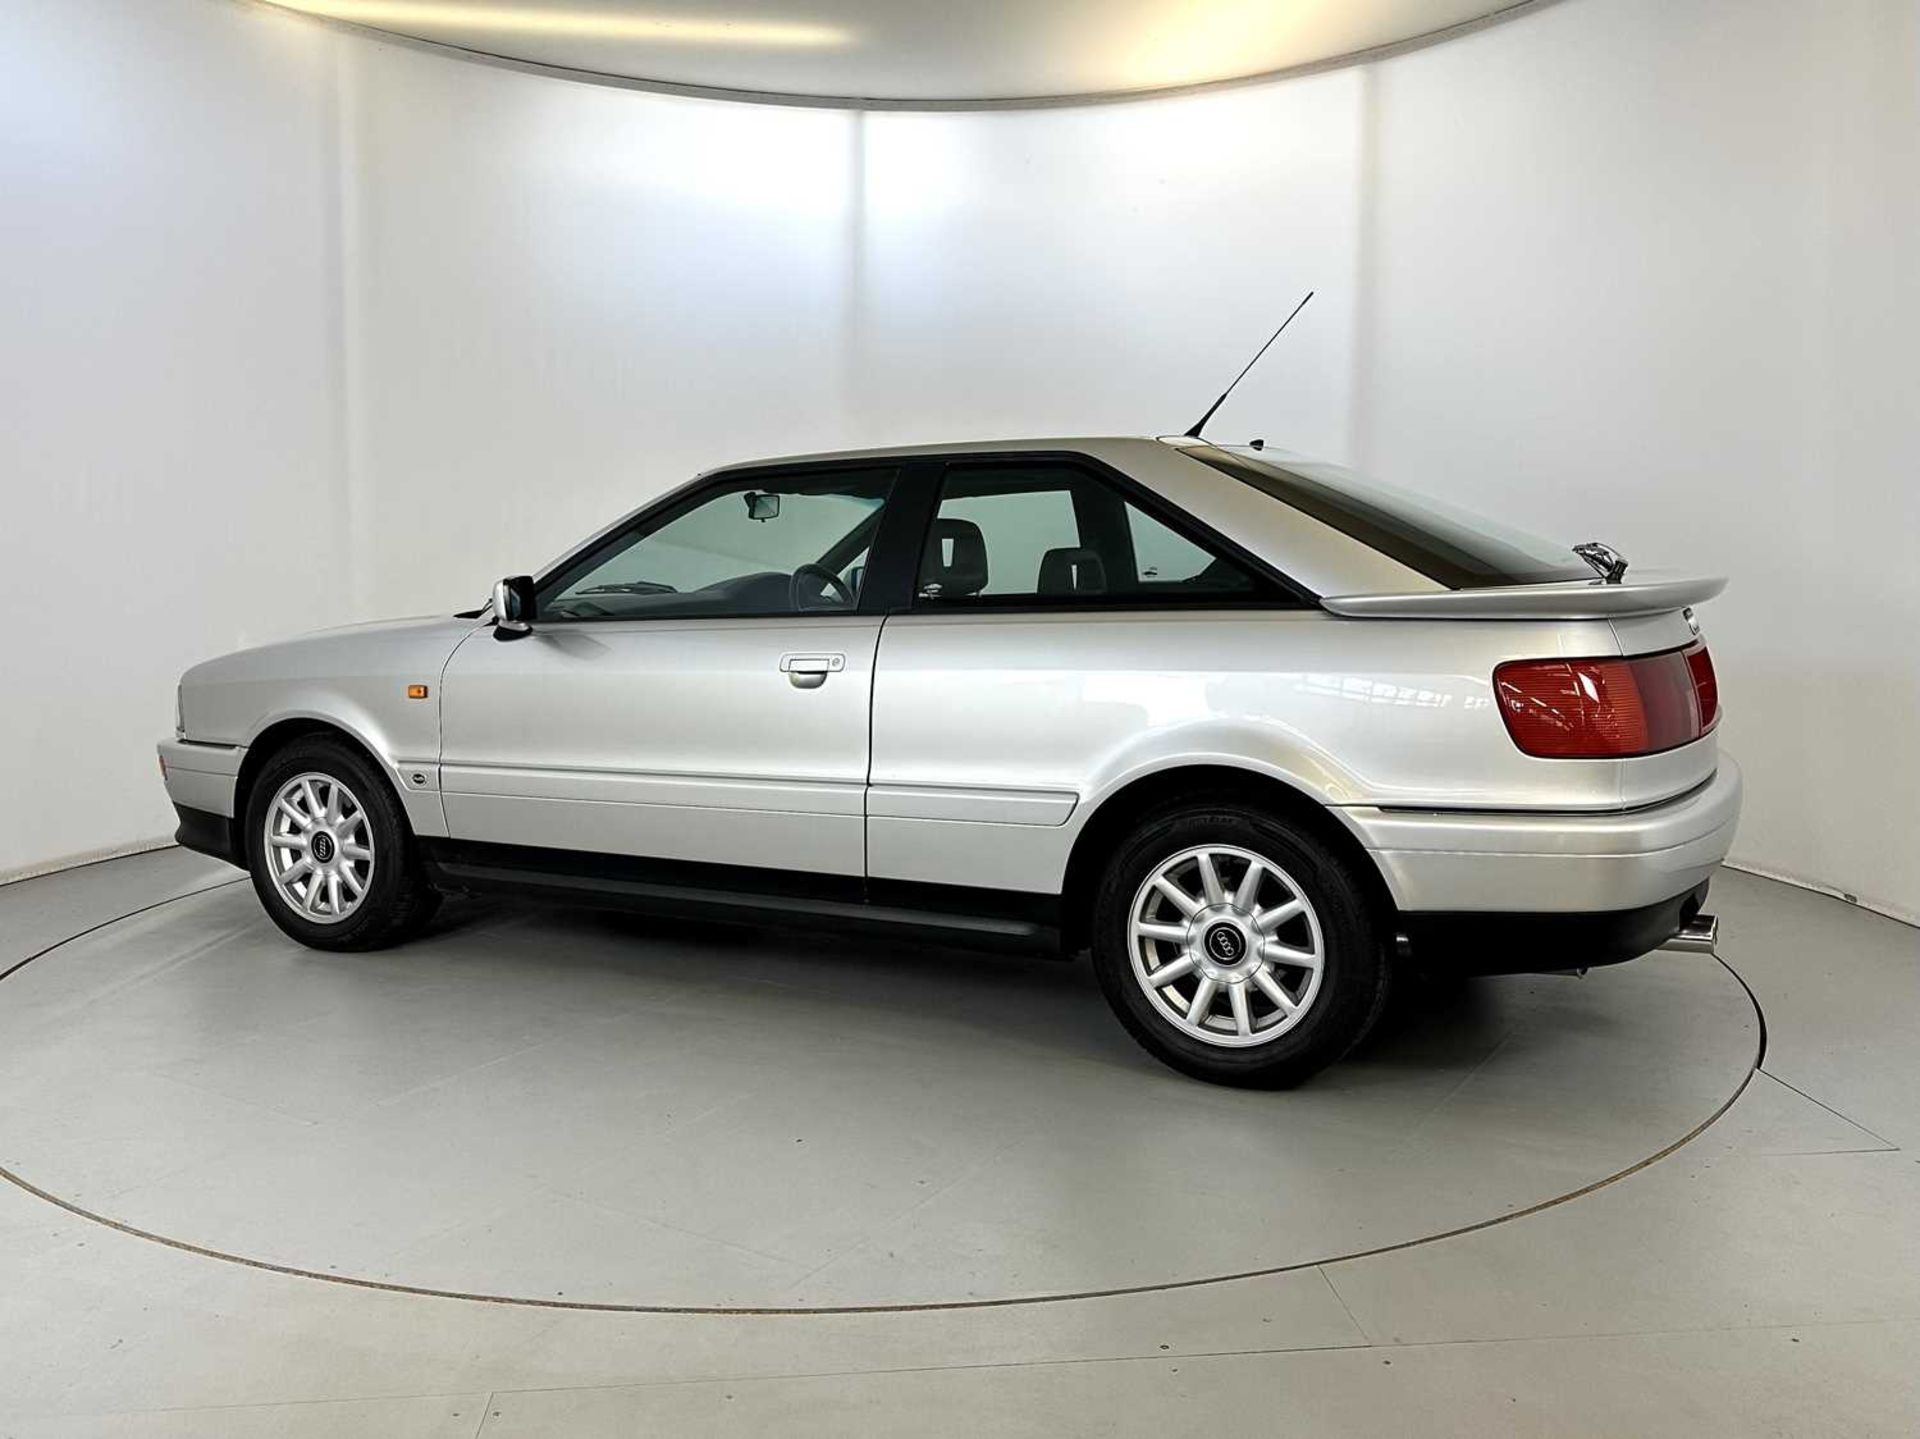 1995 Audi 80 Coupe V6 - Image 6 of 30